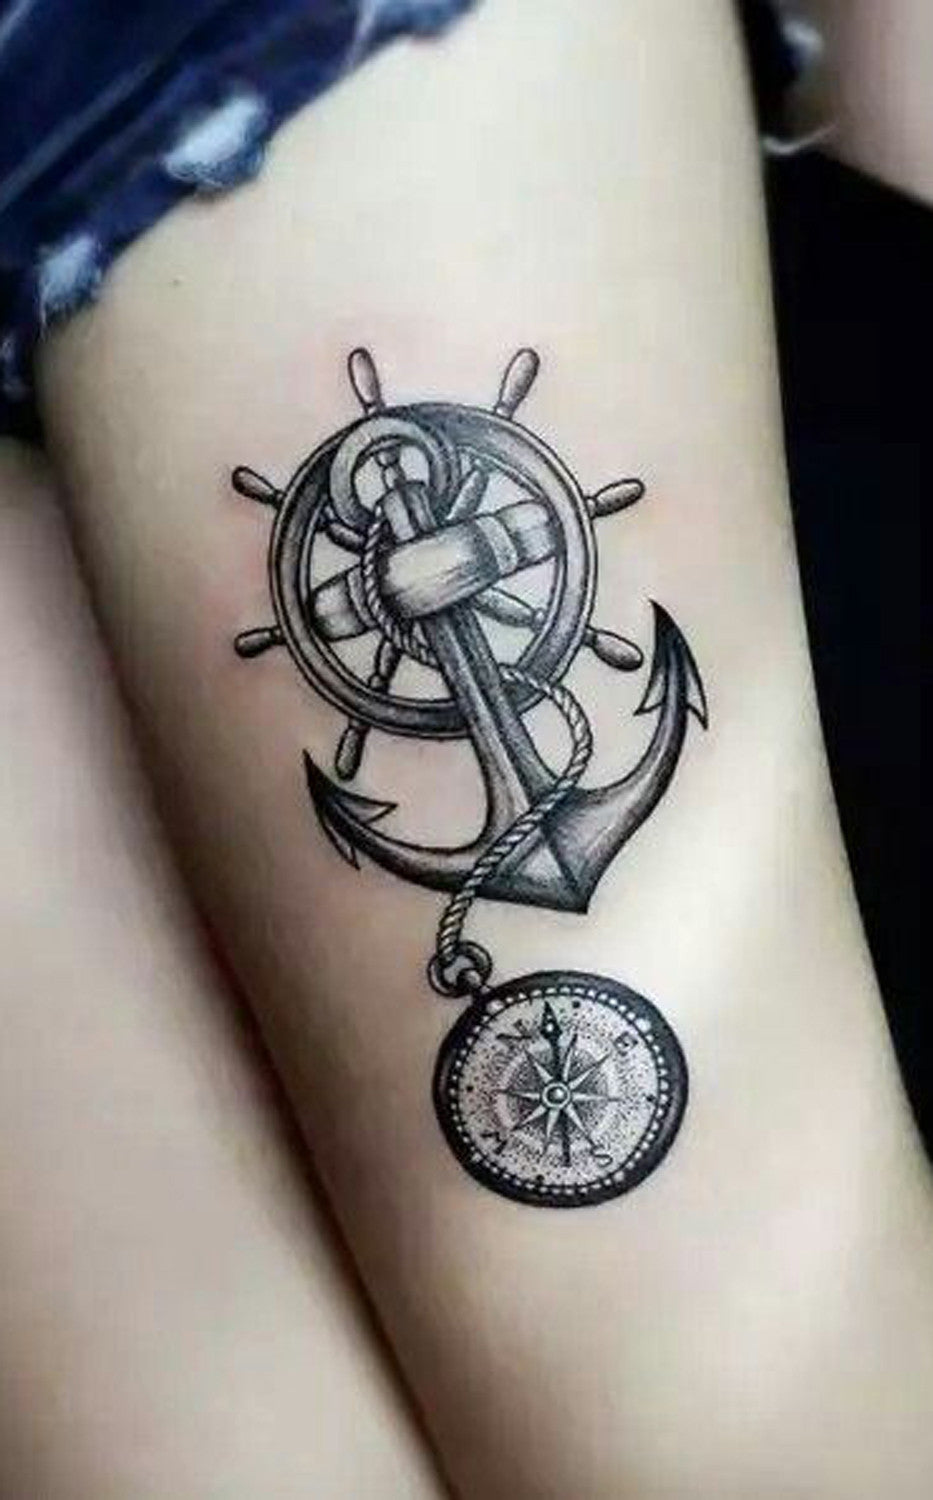 Vintage Compass Anchor Rudder Thigh Tattoo Ideas for Women at MyBodiArt.com